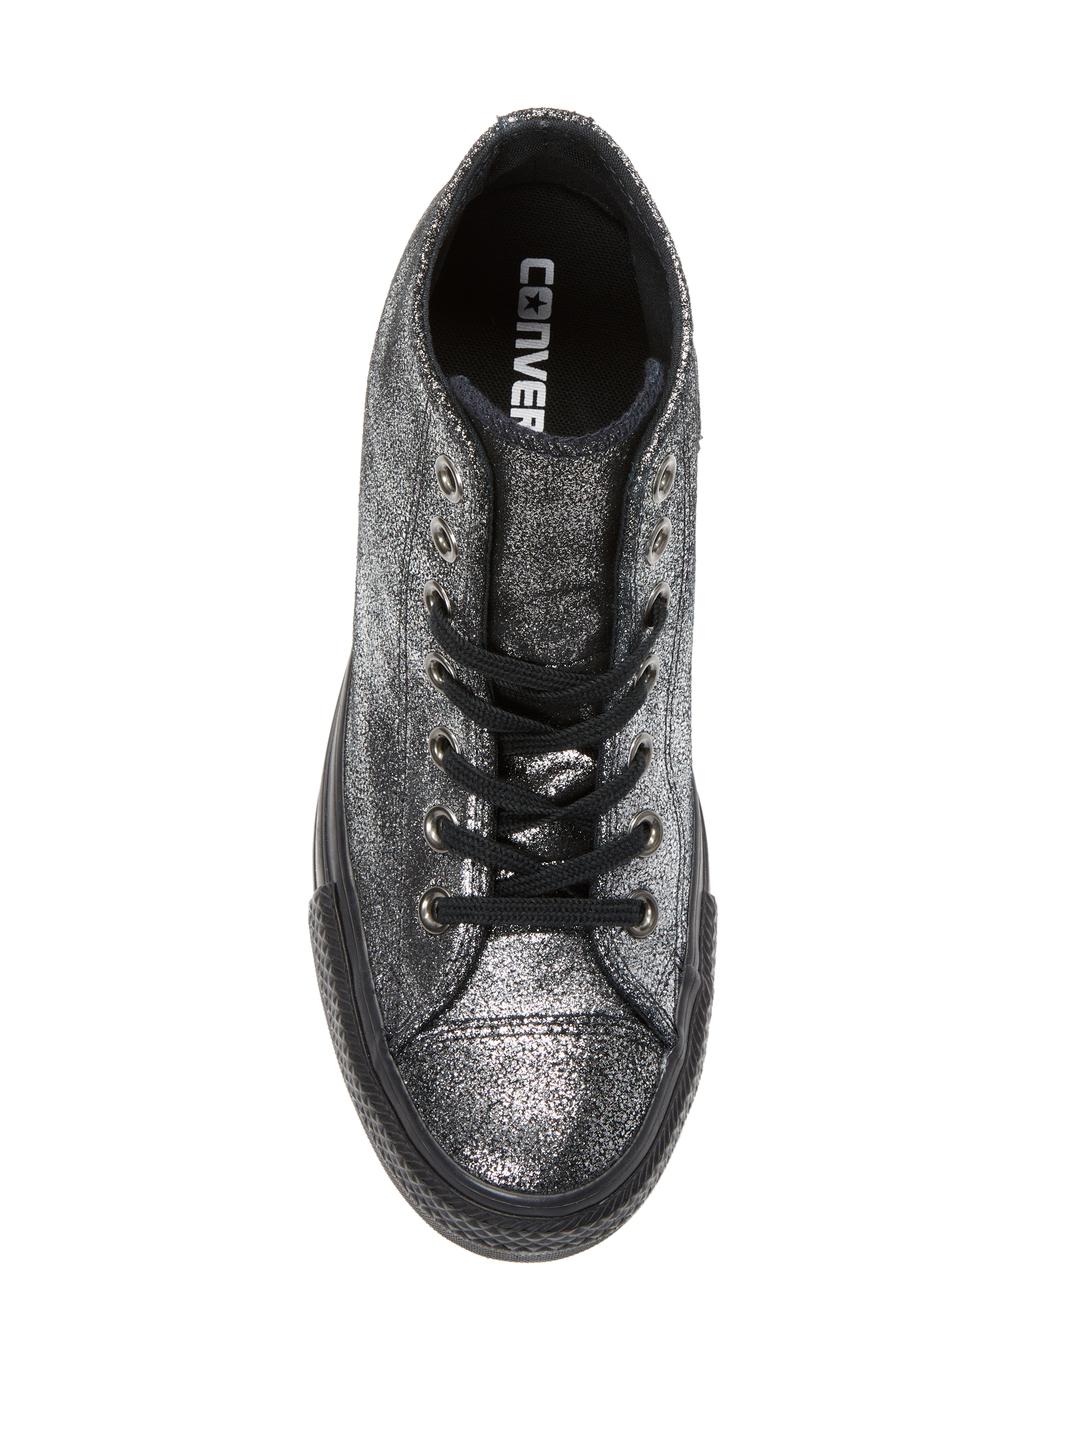 Converse Chuck Taylor Lux Hidden Wedge Sneaker in Black | Lyst